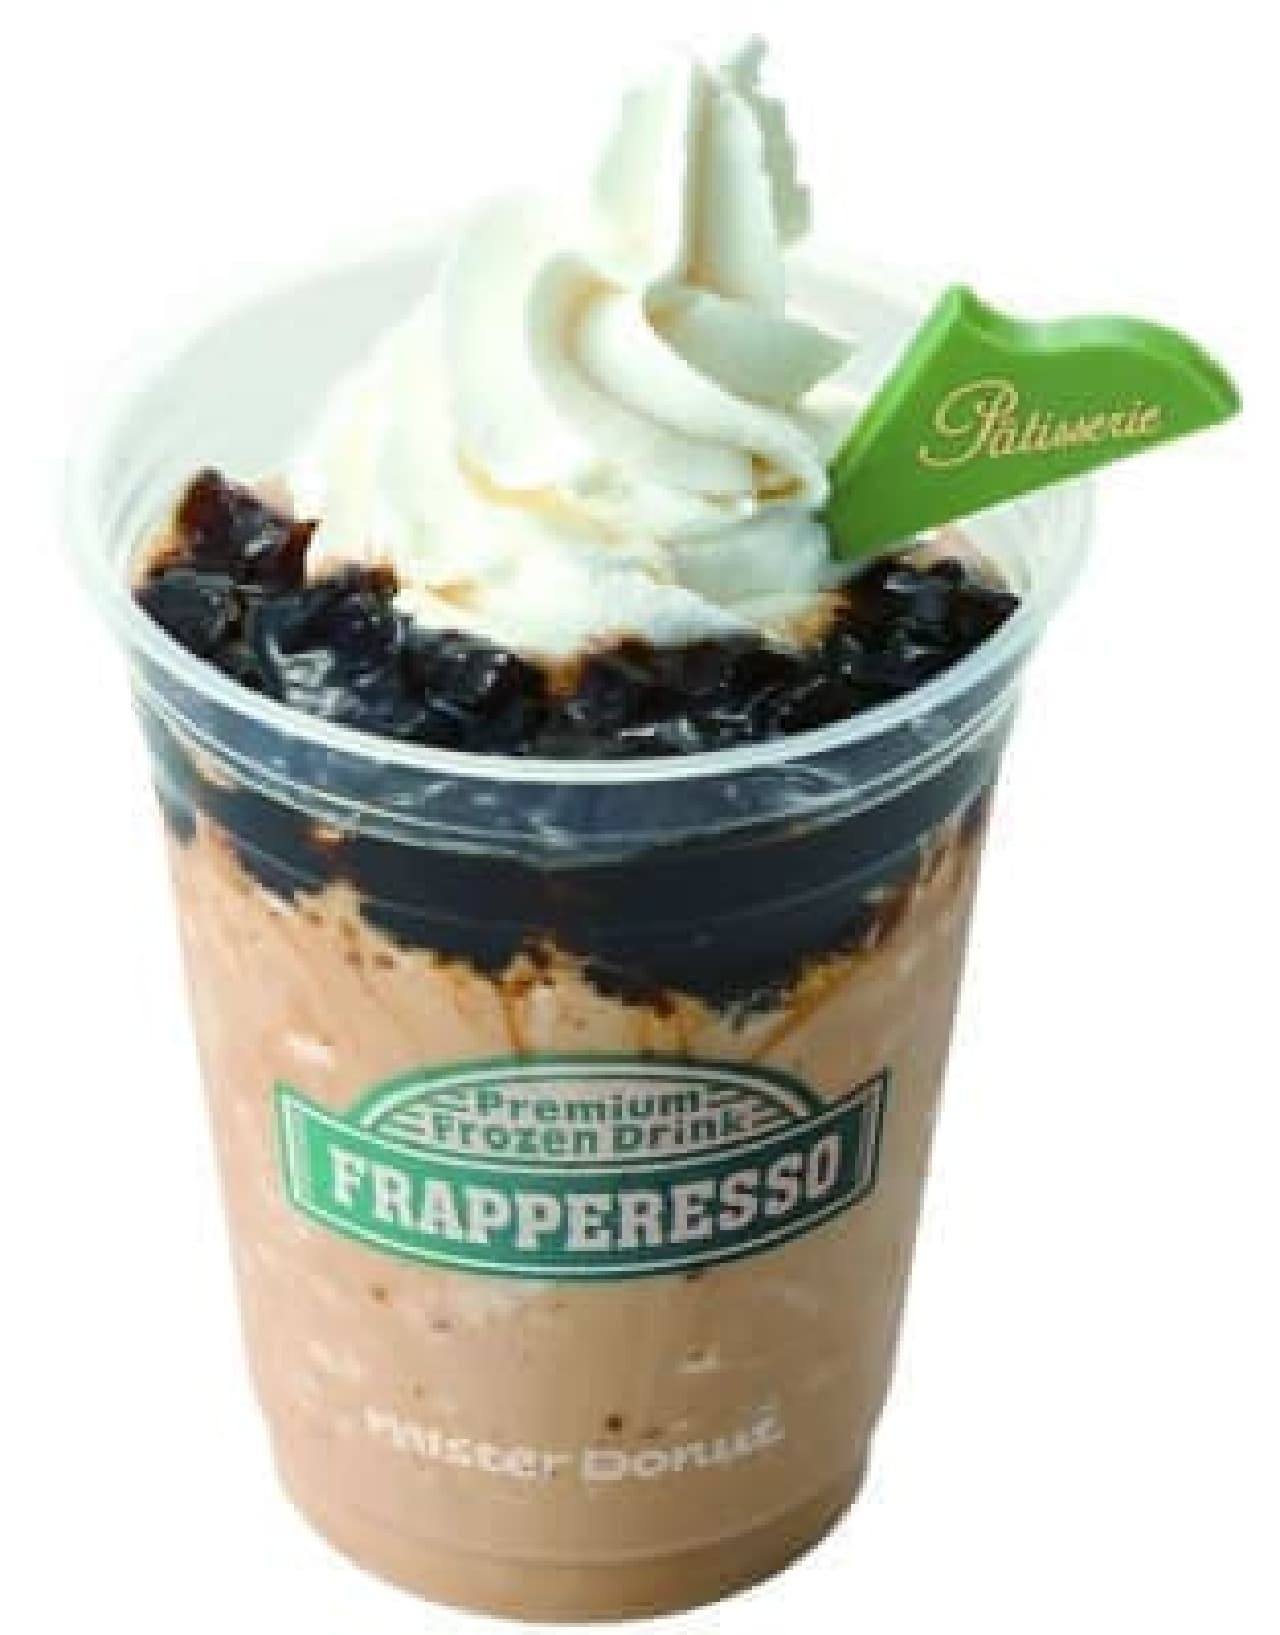 "Premium Coffee Fraperesso" with coffee jelly